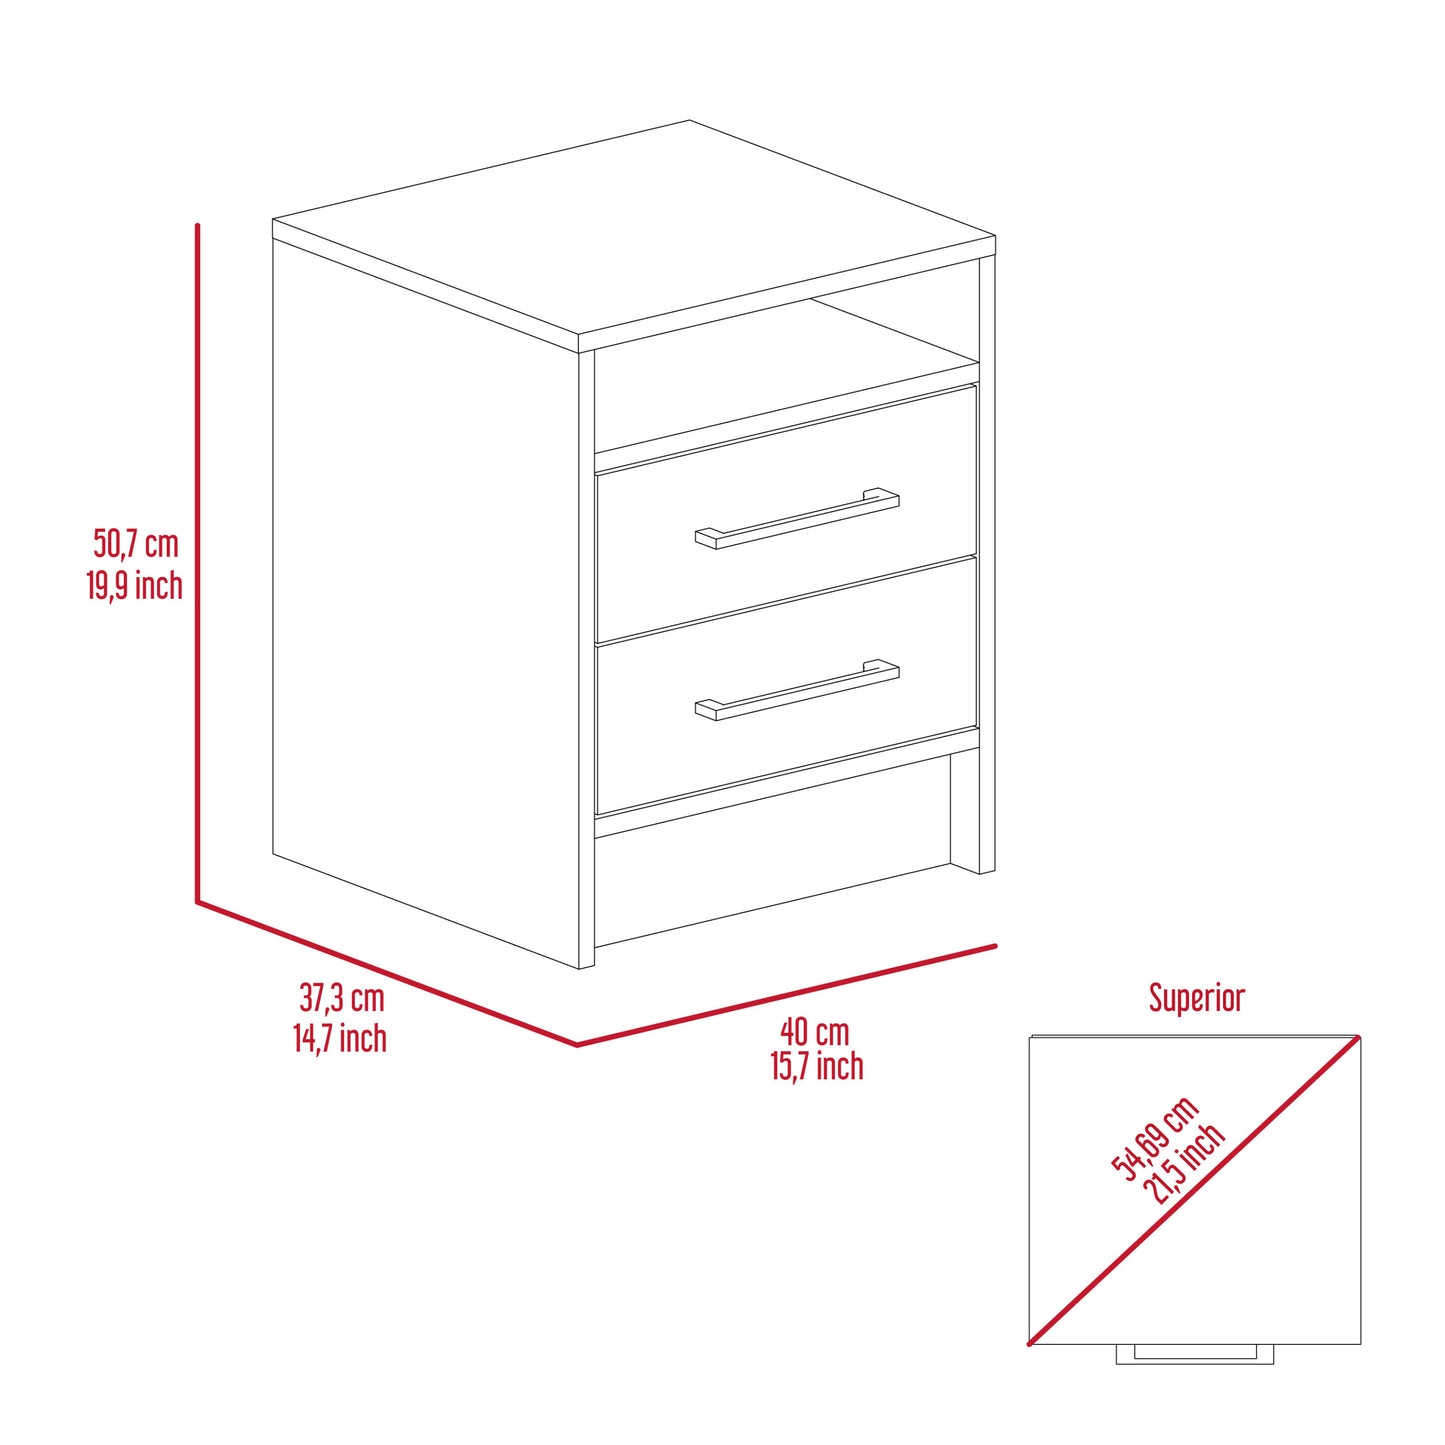 Rowley 2-Drawer 1-Shelf Rectangle Nightstand in Light Grey Finish